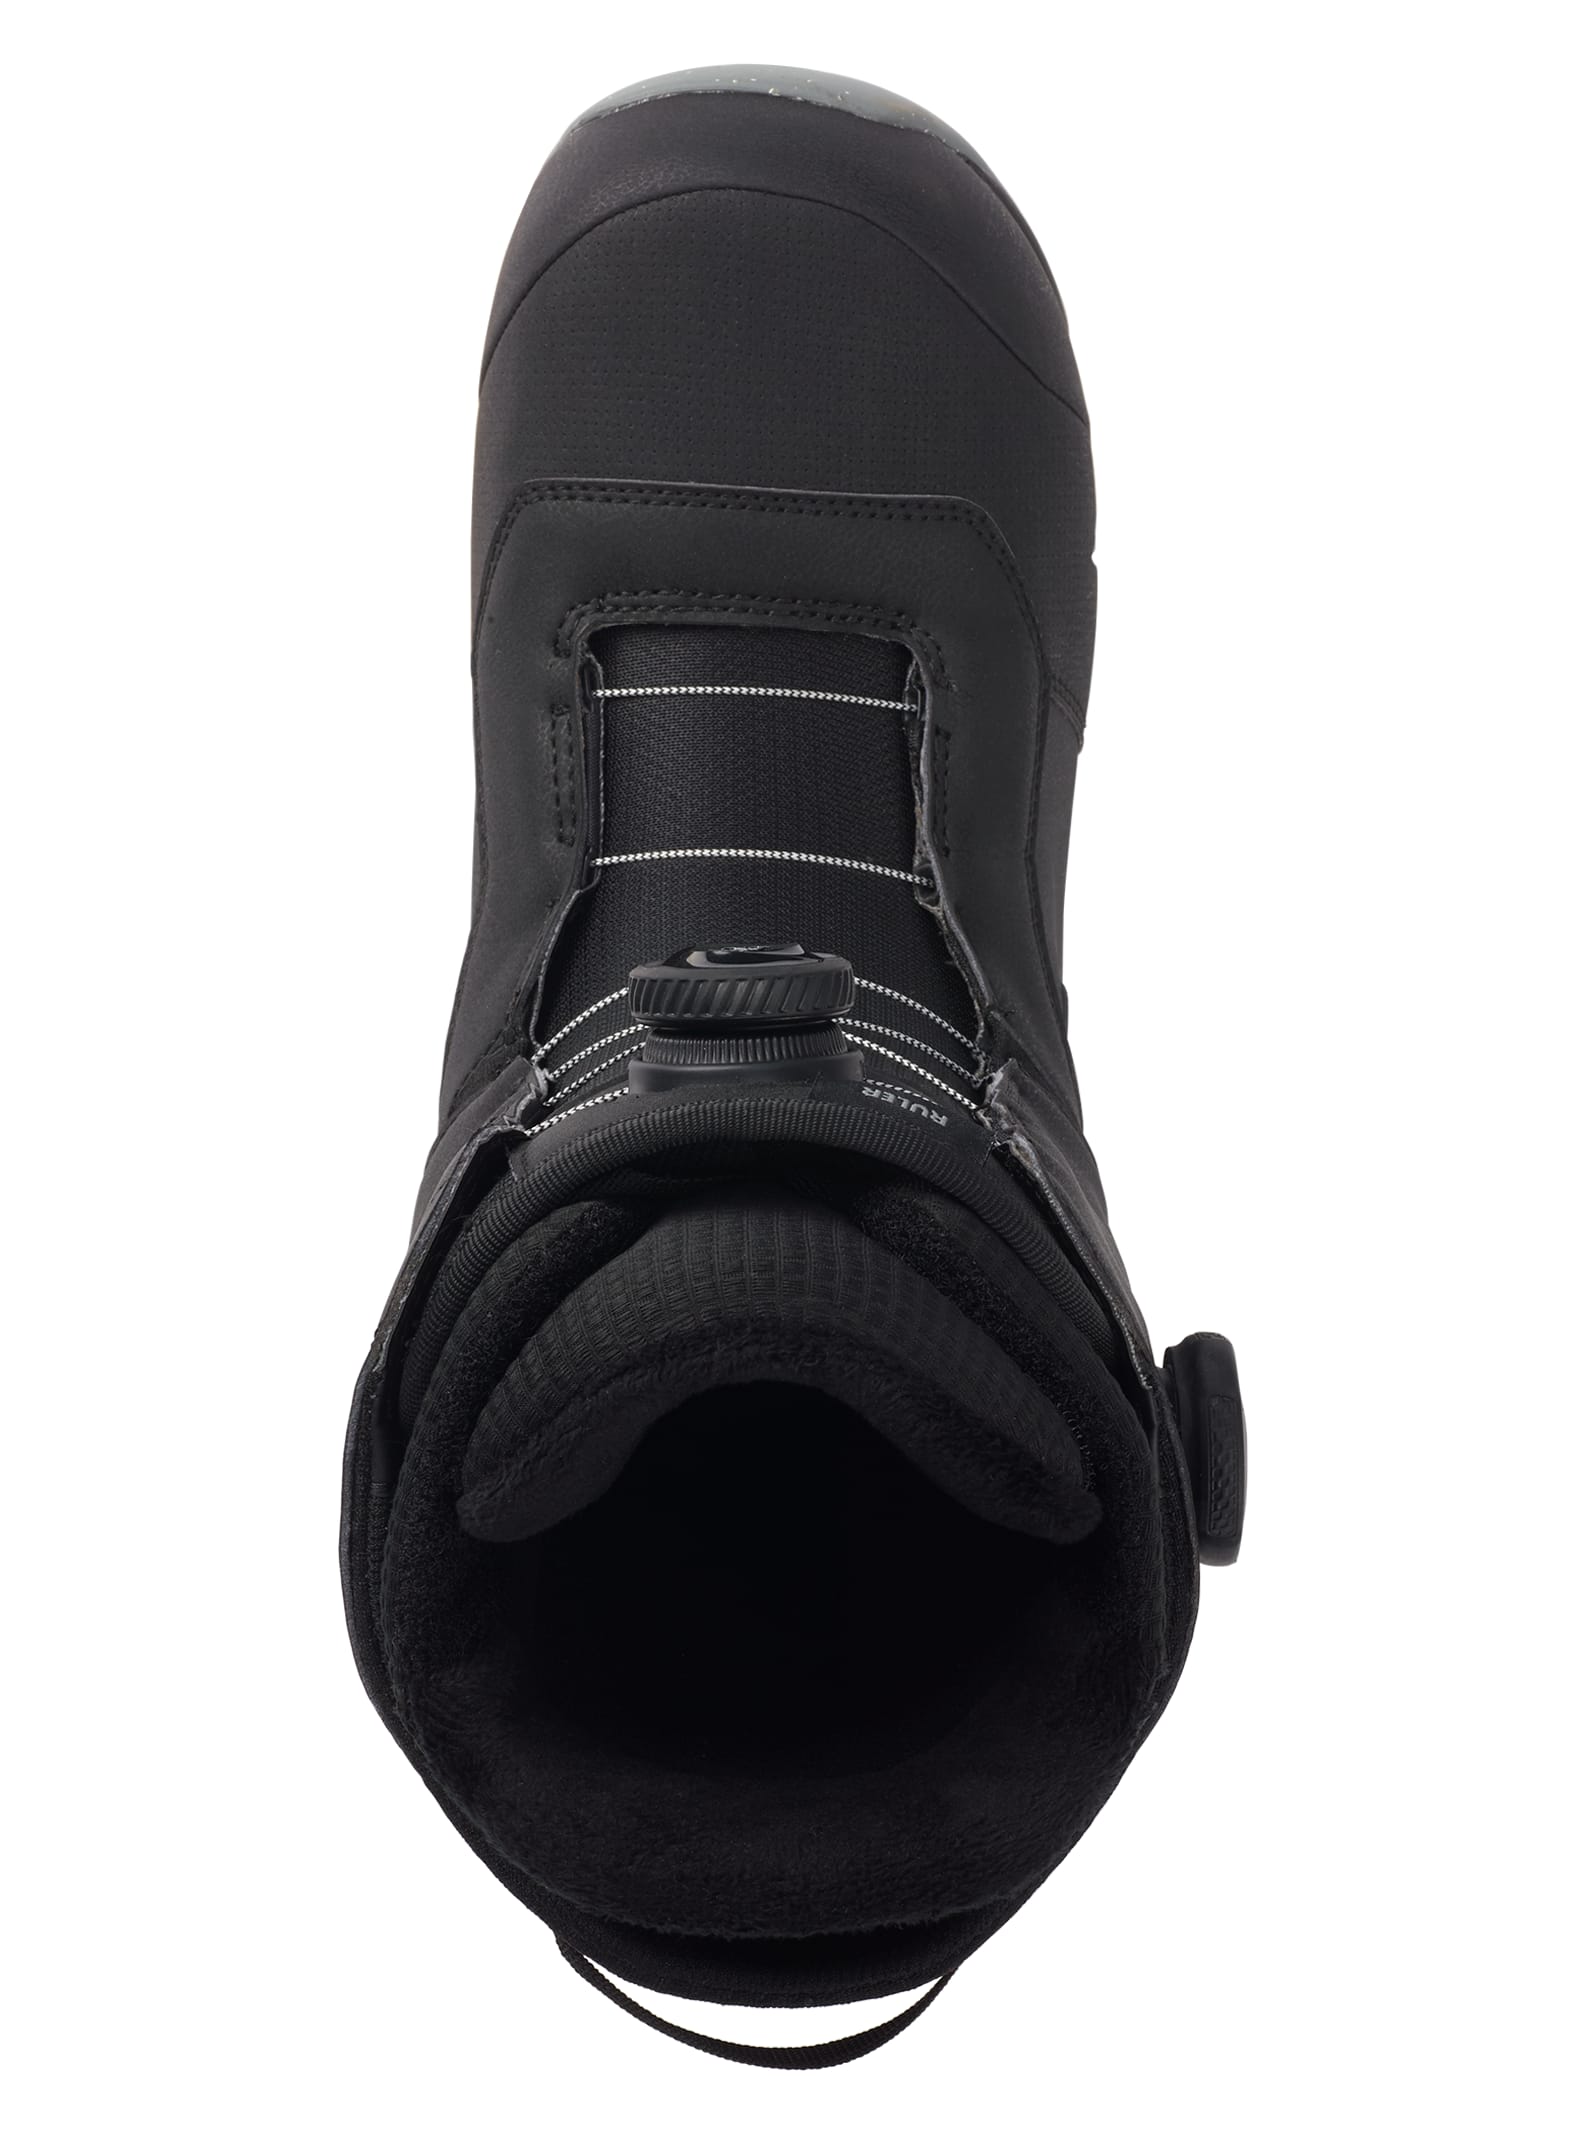 Burton Men's Burton Ruler BOA® Snowboard Boots (Wide) Black